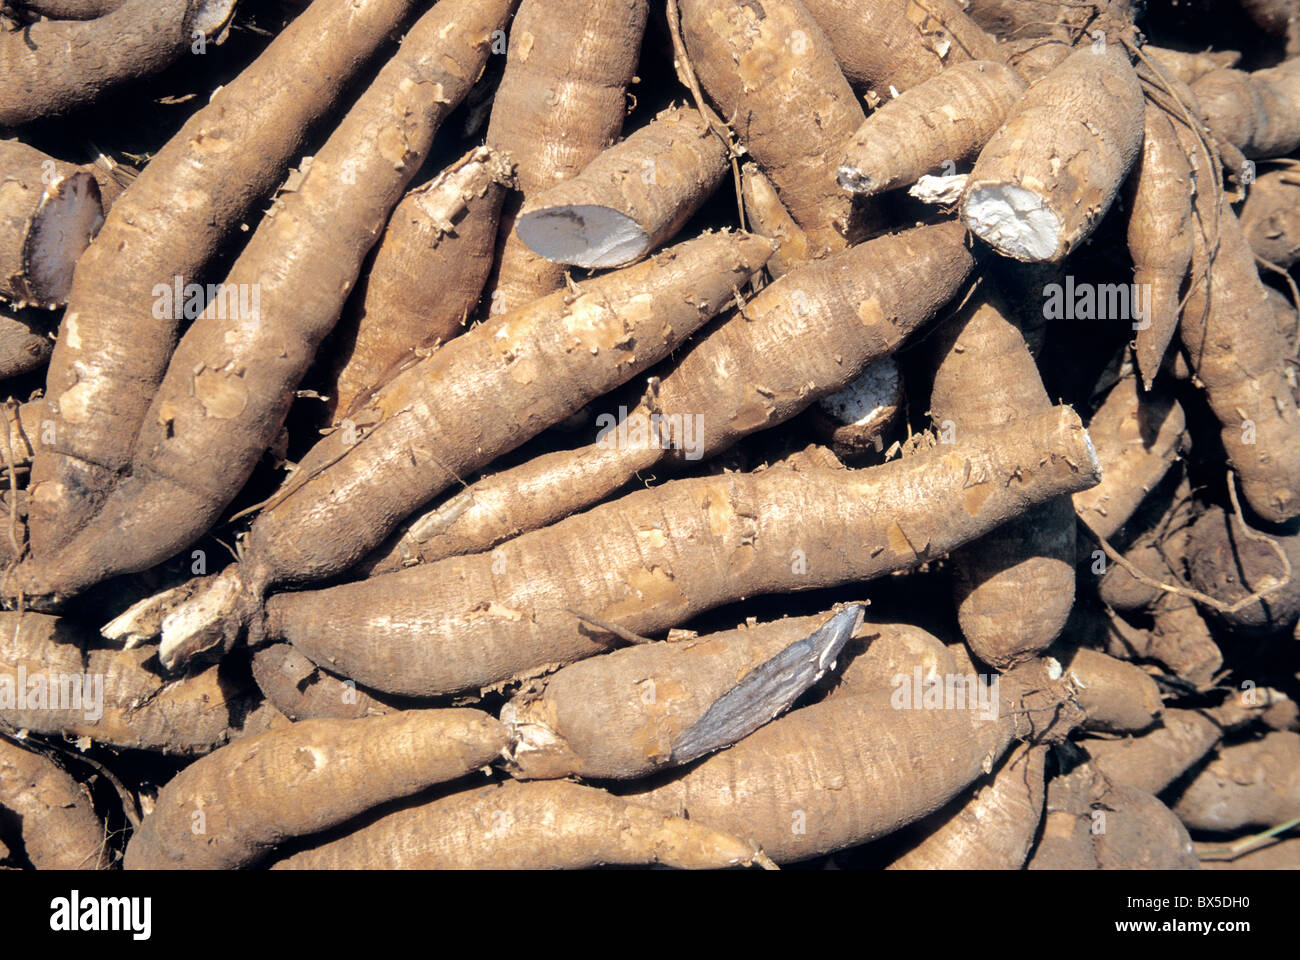 Harvested 'Cassava' roots, Stock Photo